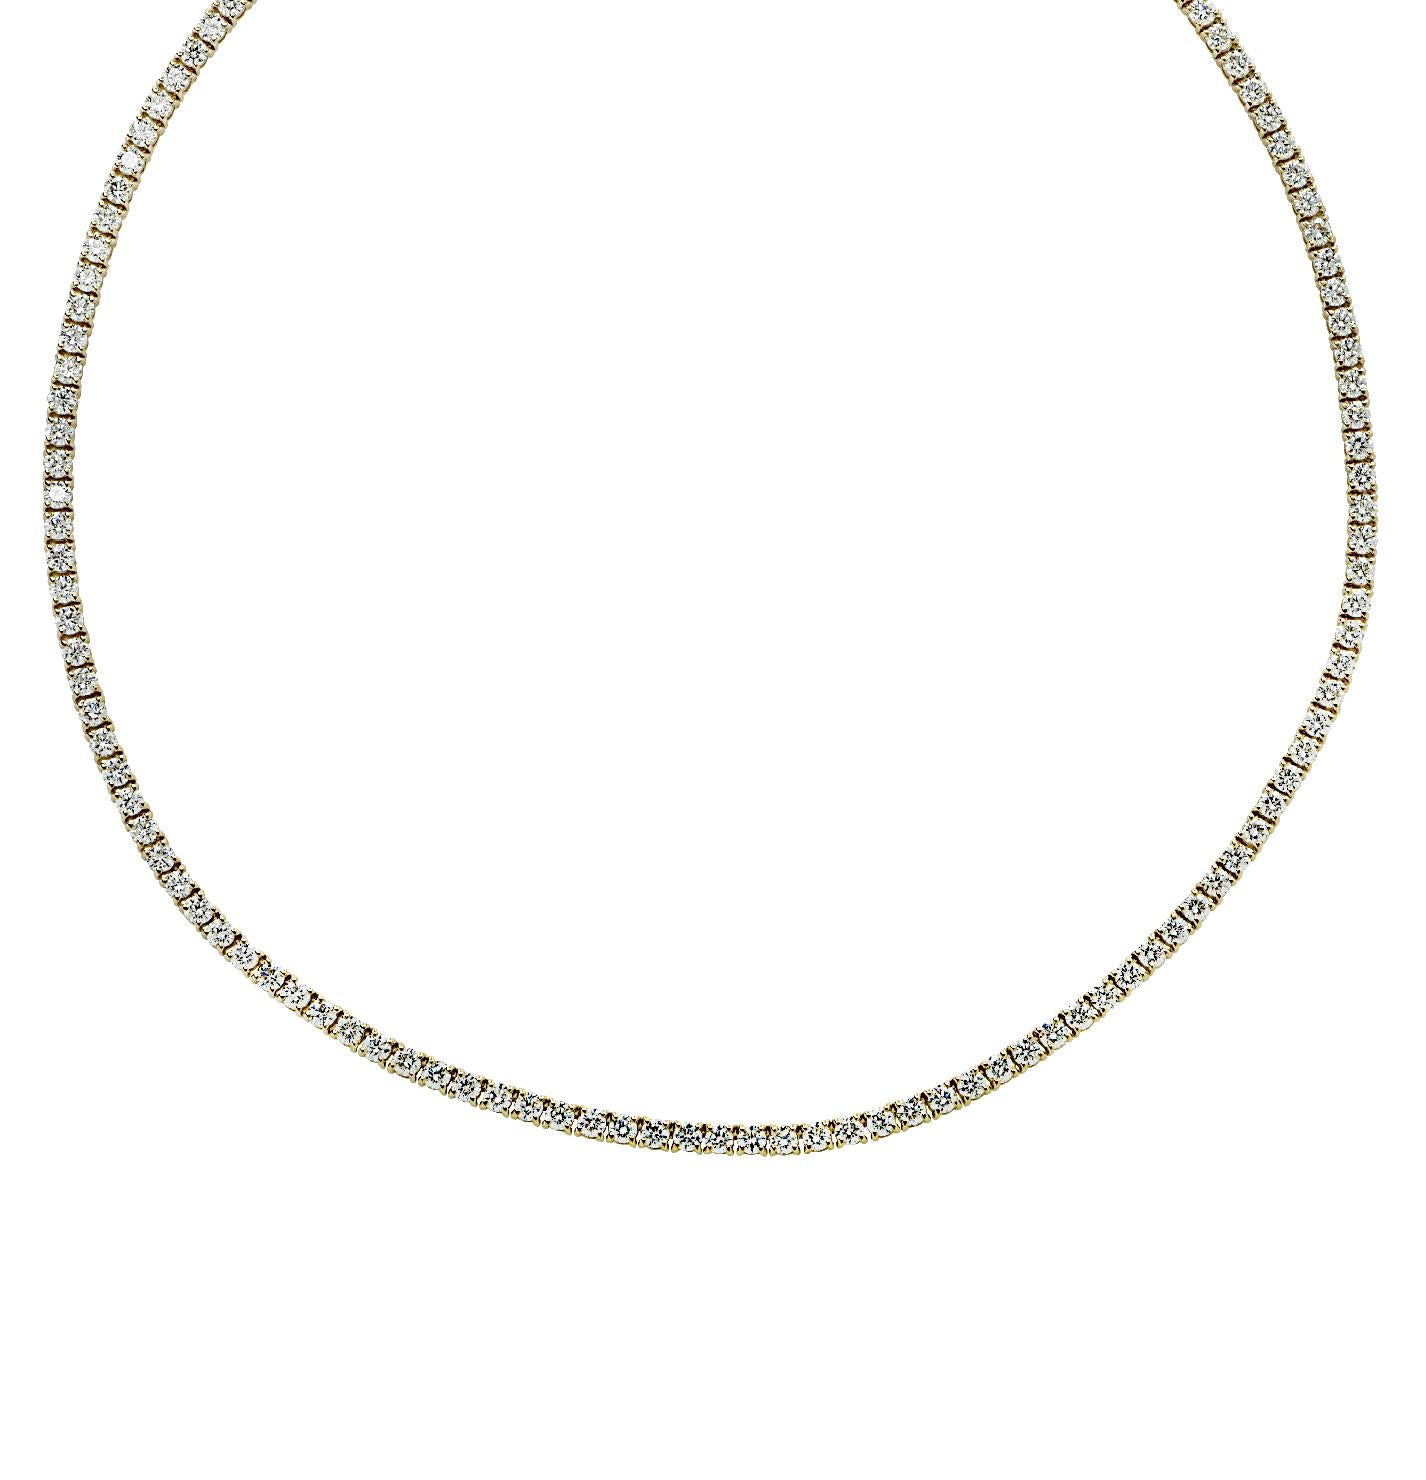 Round Cut Vivid Diamonds 6.98 Carat Straight Line Diamond Tennis Necklace For Sale